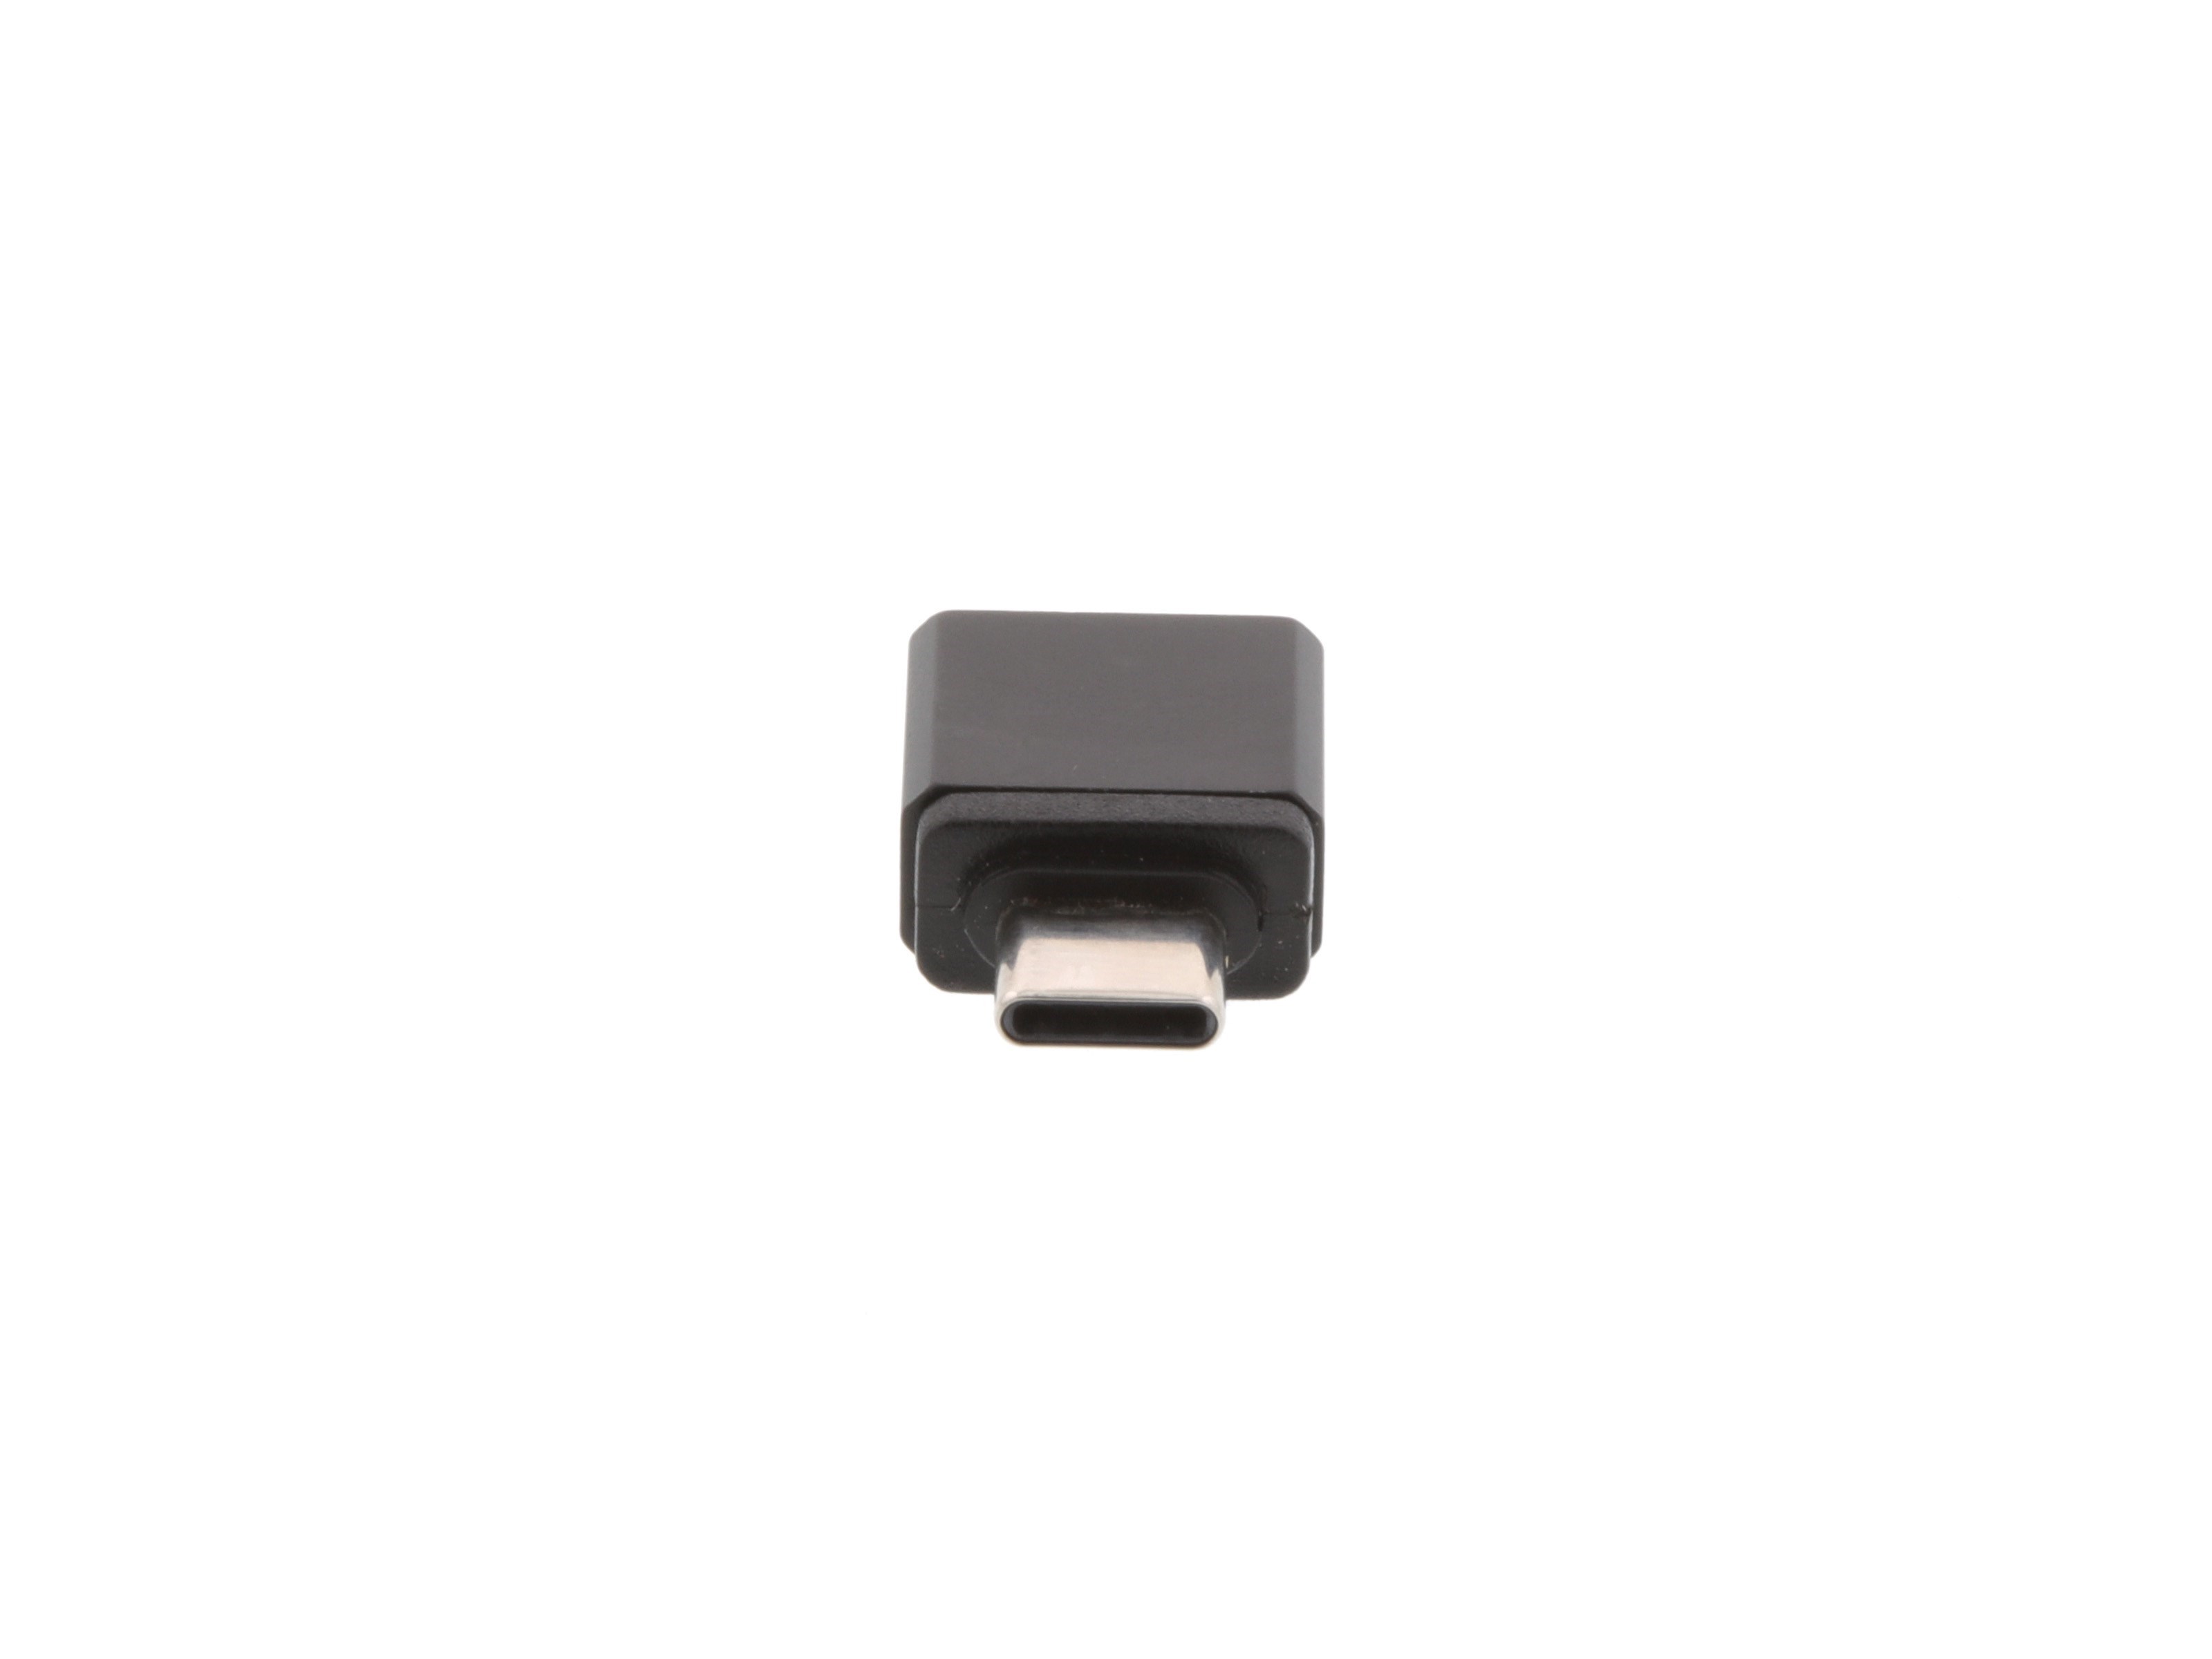  3Pack,Lightning Female to USB C Male Adapter